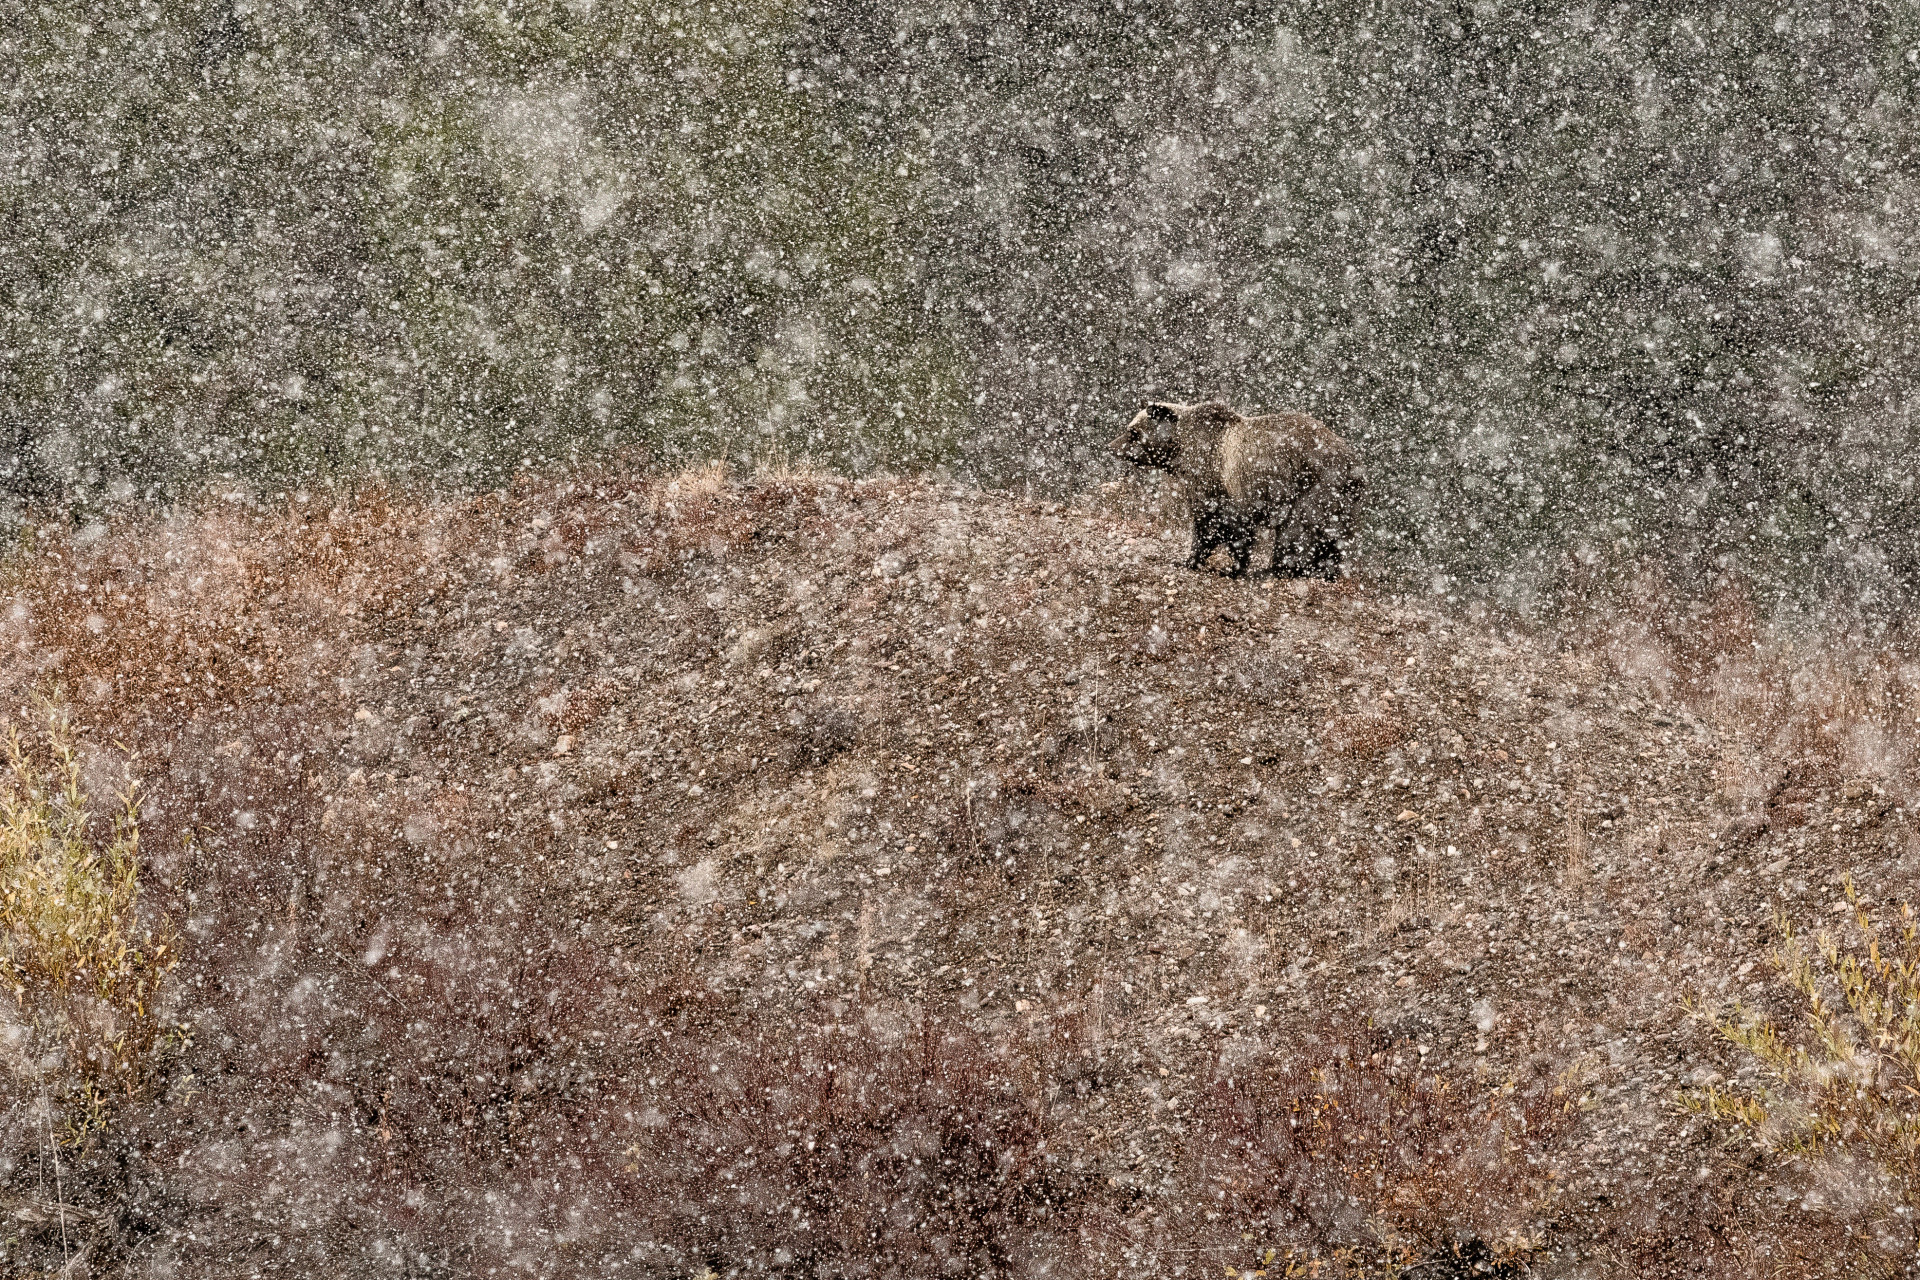 ‘Dibawah salju’ – Stefano Quirini (Italia). pemenang kategori mamalia. Foto : Nature Photographer of The Year 2019